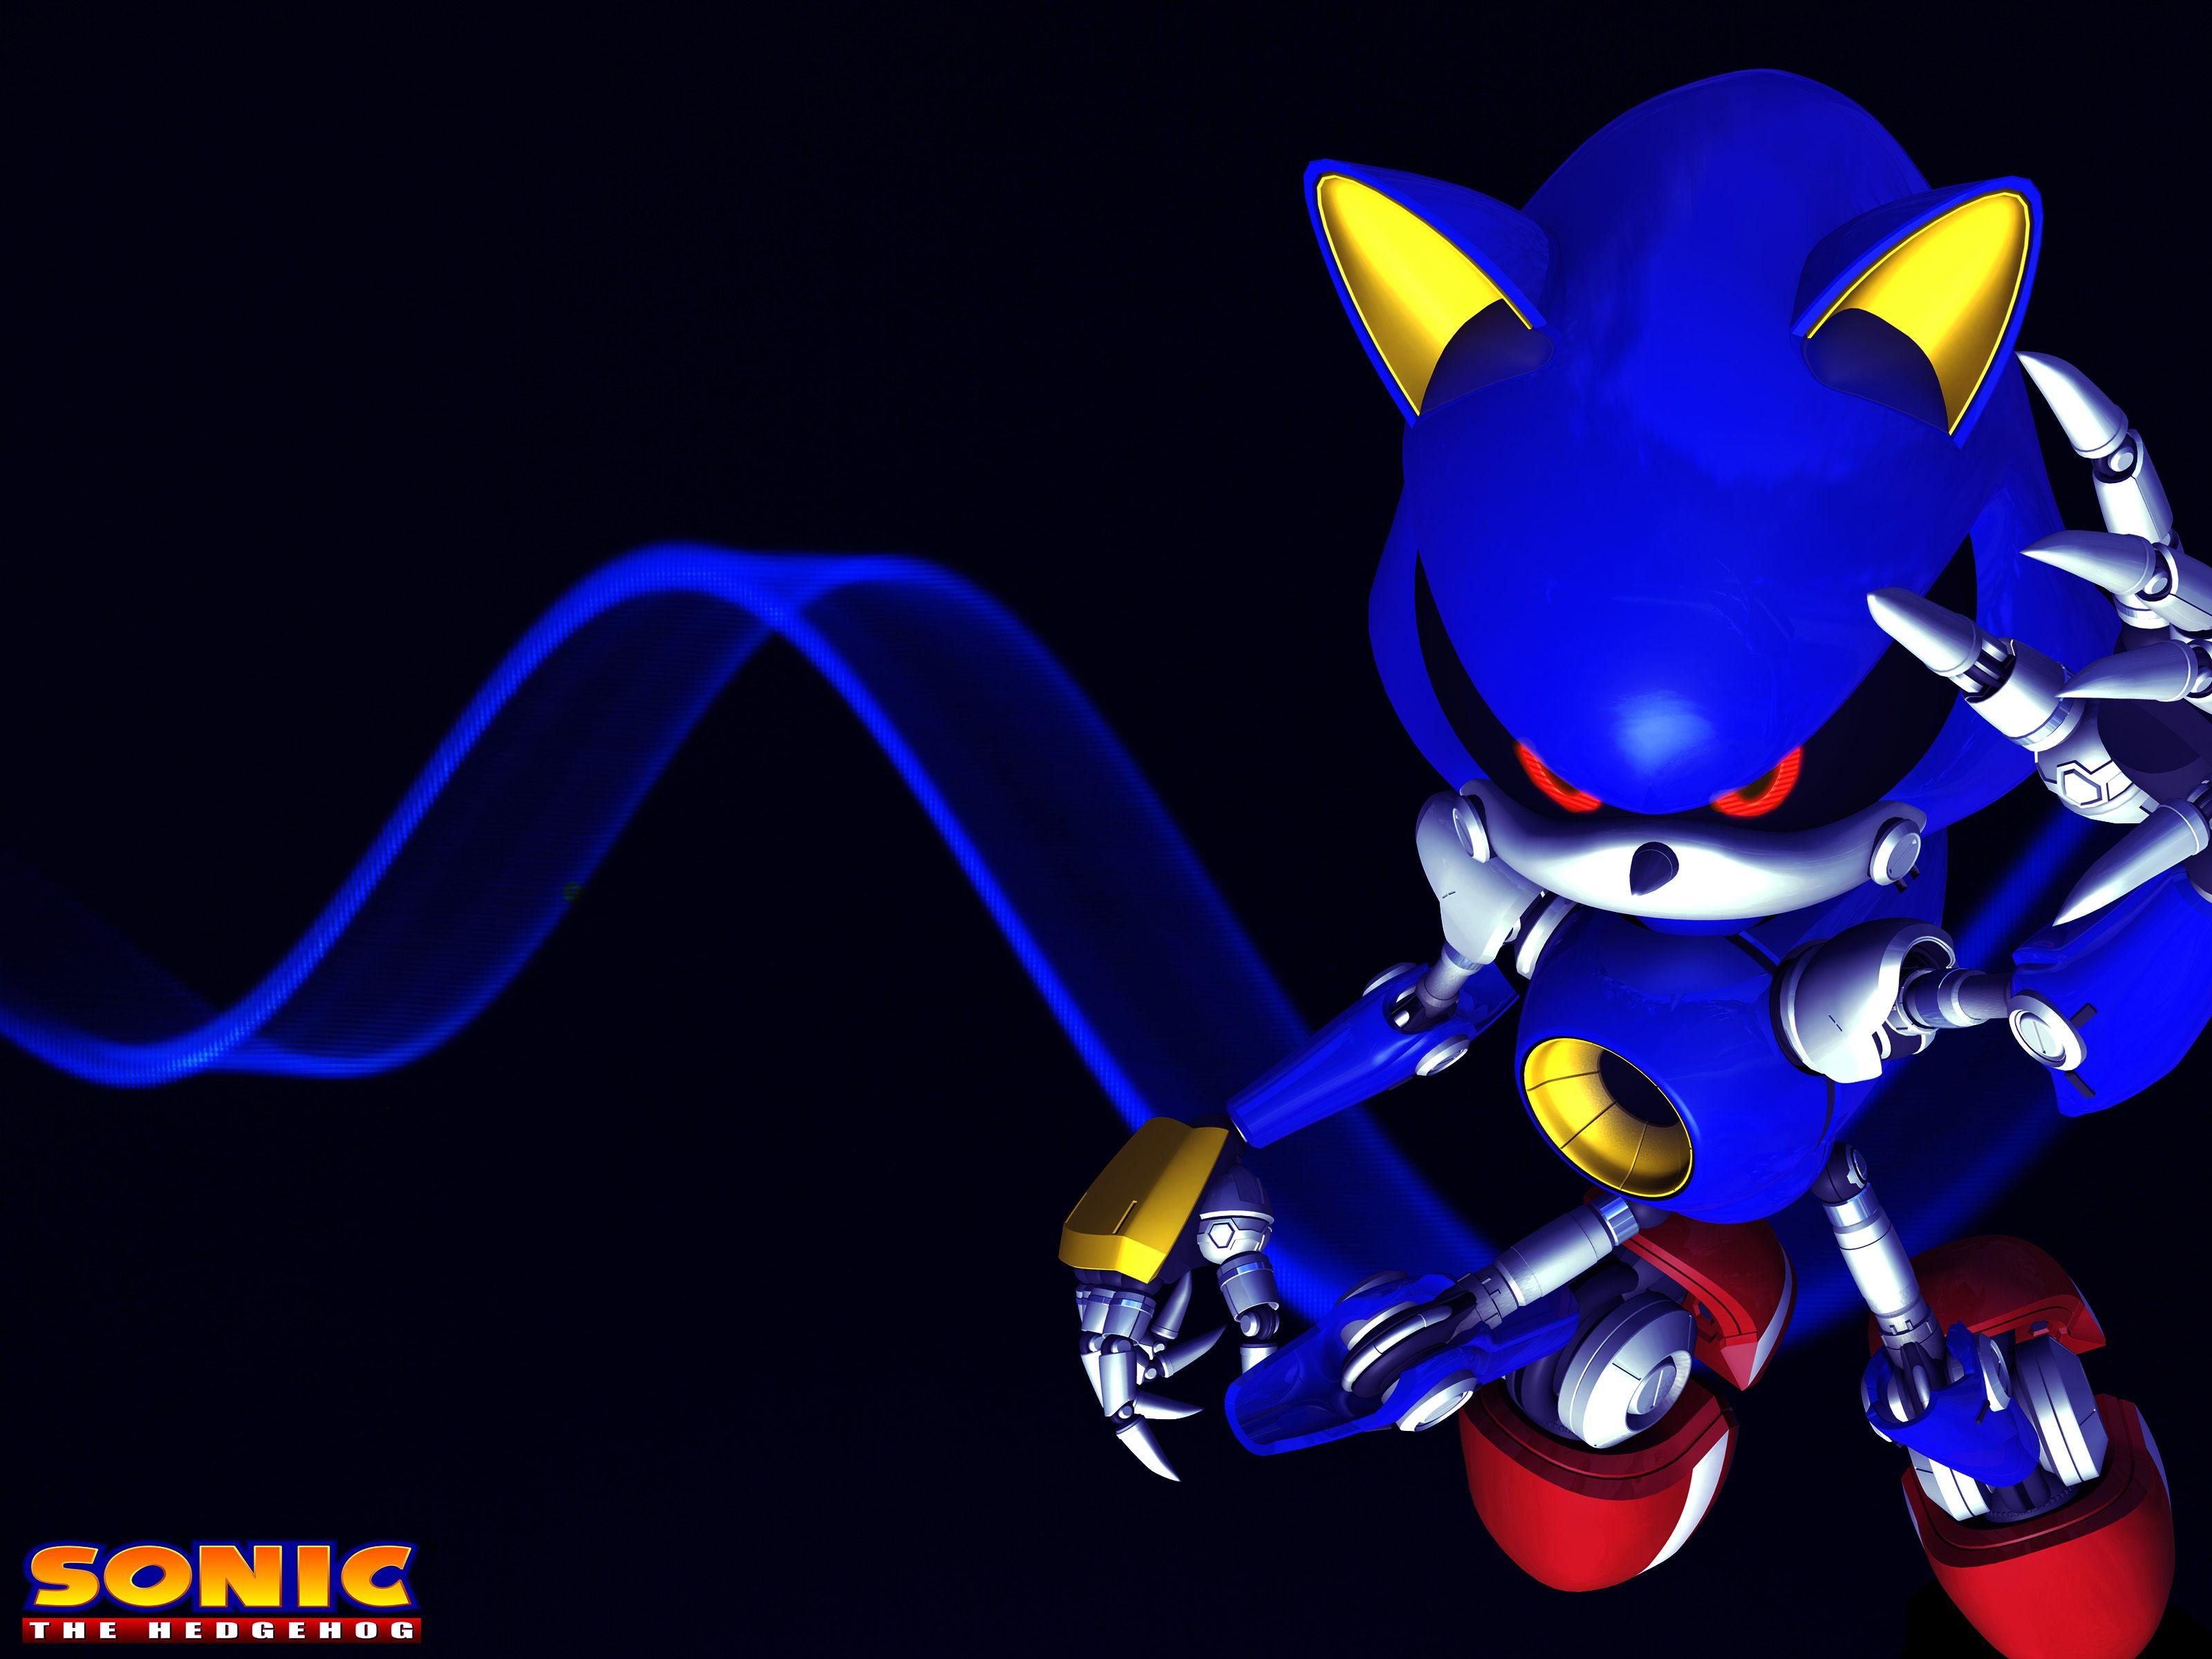 Neo Metal Sonic by Advert-man.deviantart.com on @DeviantArt